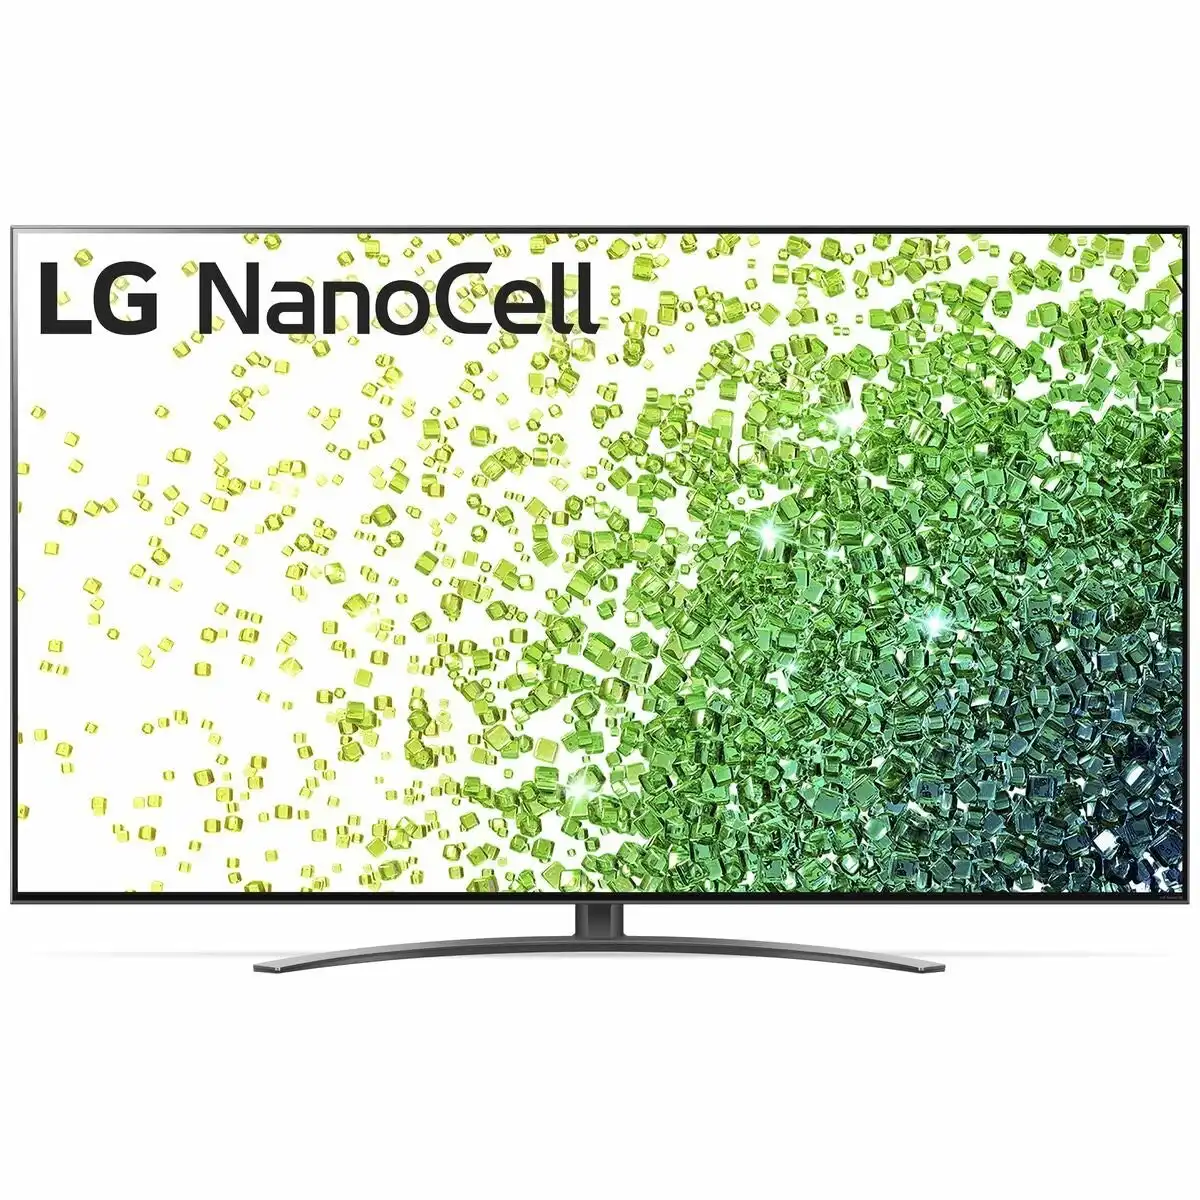 LG 75 Inch 4K UHD HDR Smart Nano Cell LED TV